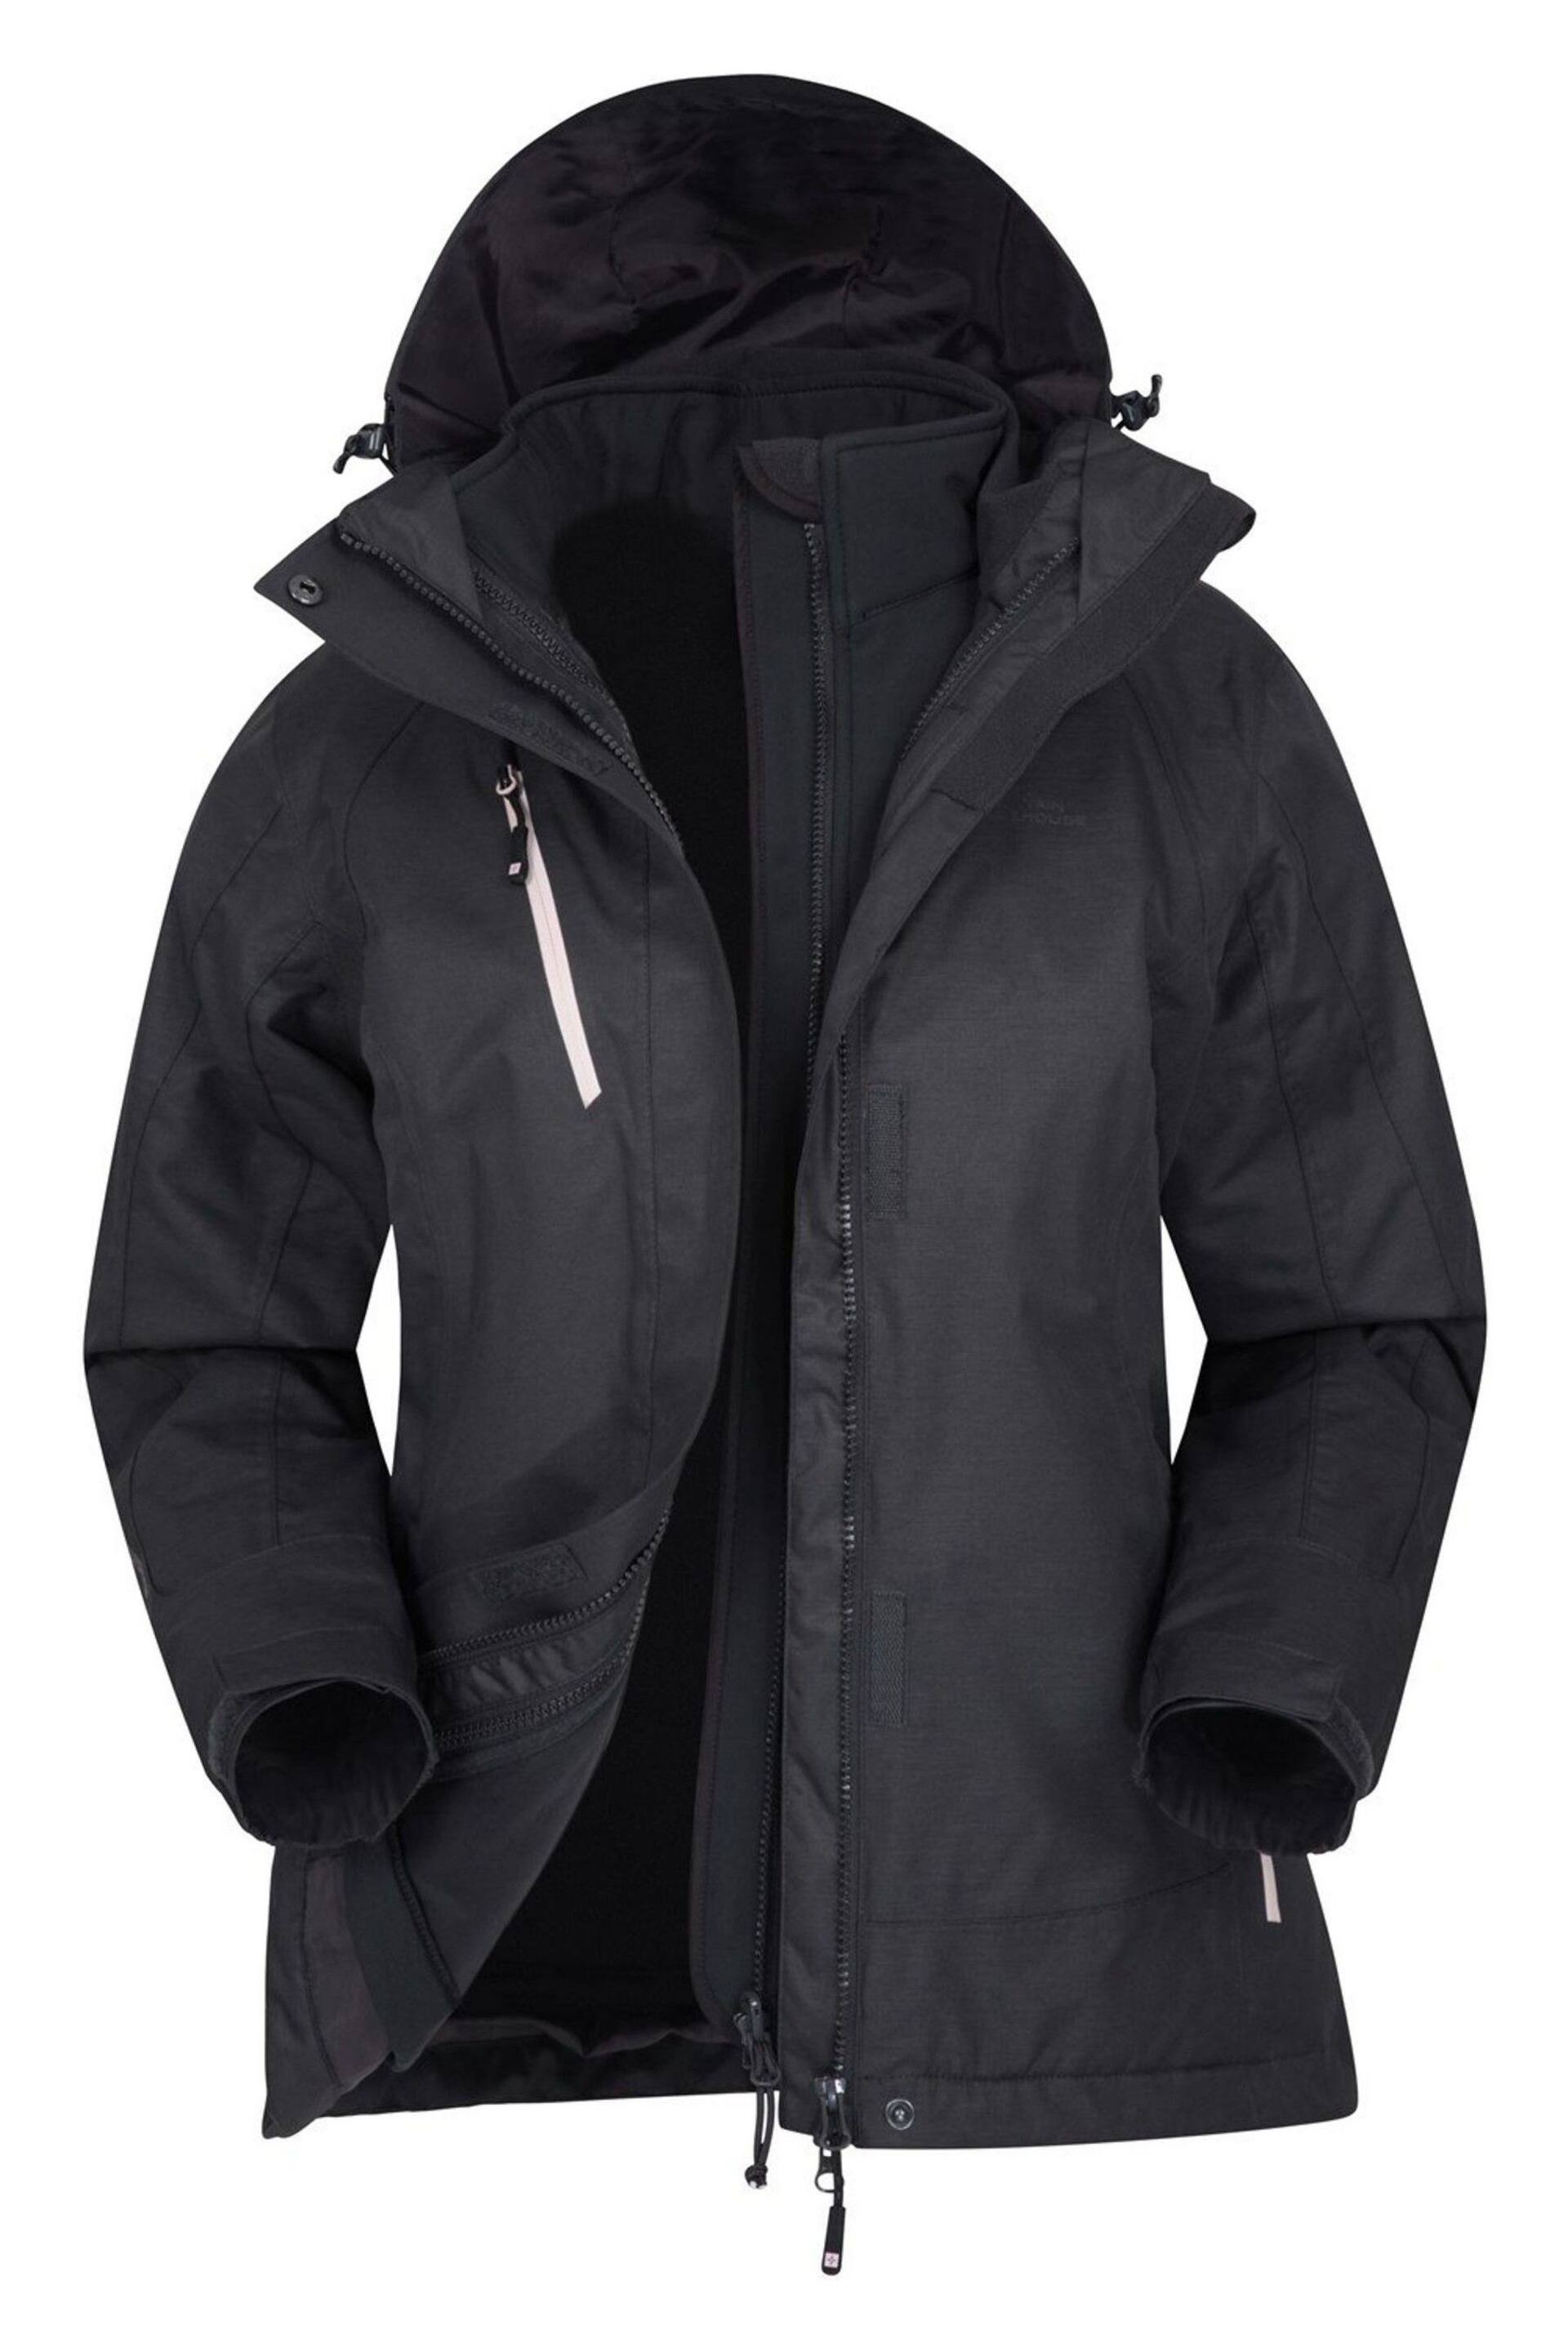 Mountain Warehouse Black Womens Bracken Melange 3 in 1 Waterproof and Breathable Jacket - Image 1 of 4